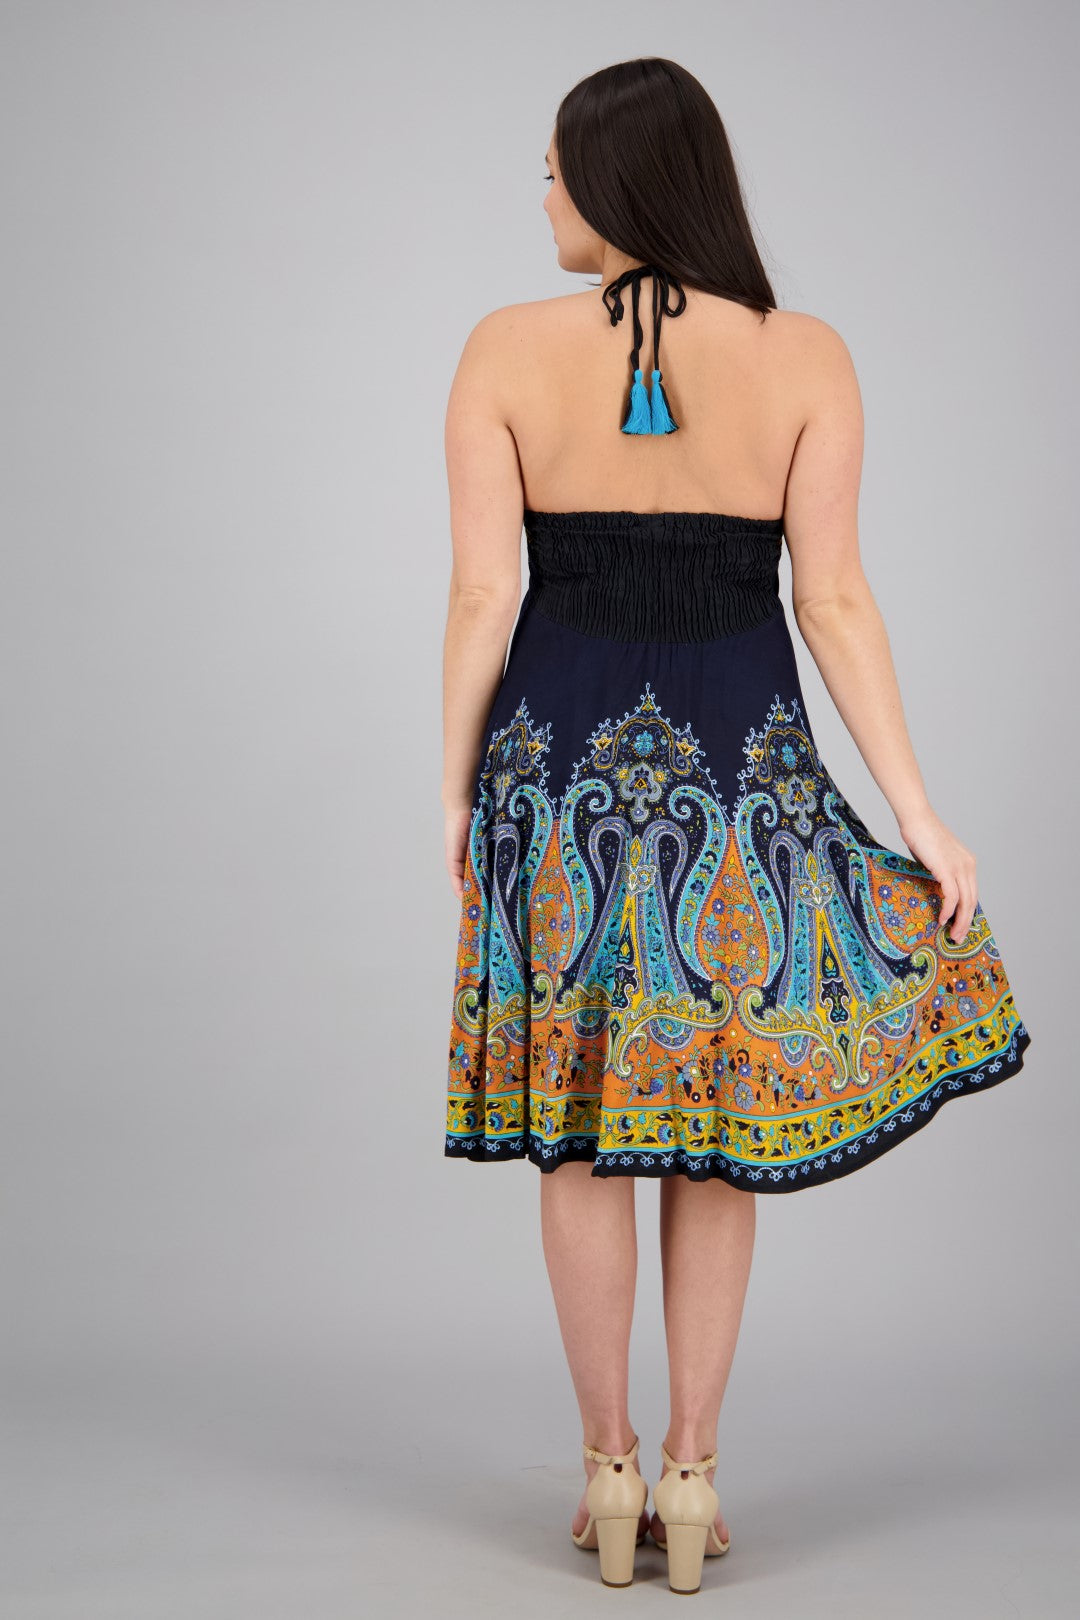 Mid-Length Halter Top Batik Dress 1969